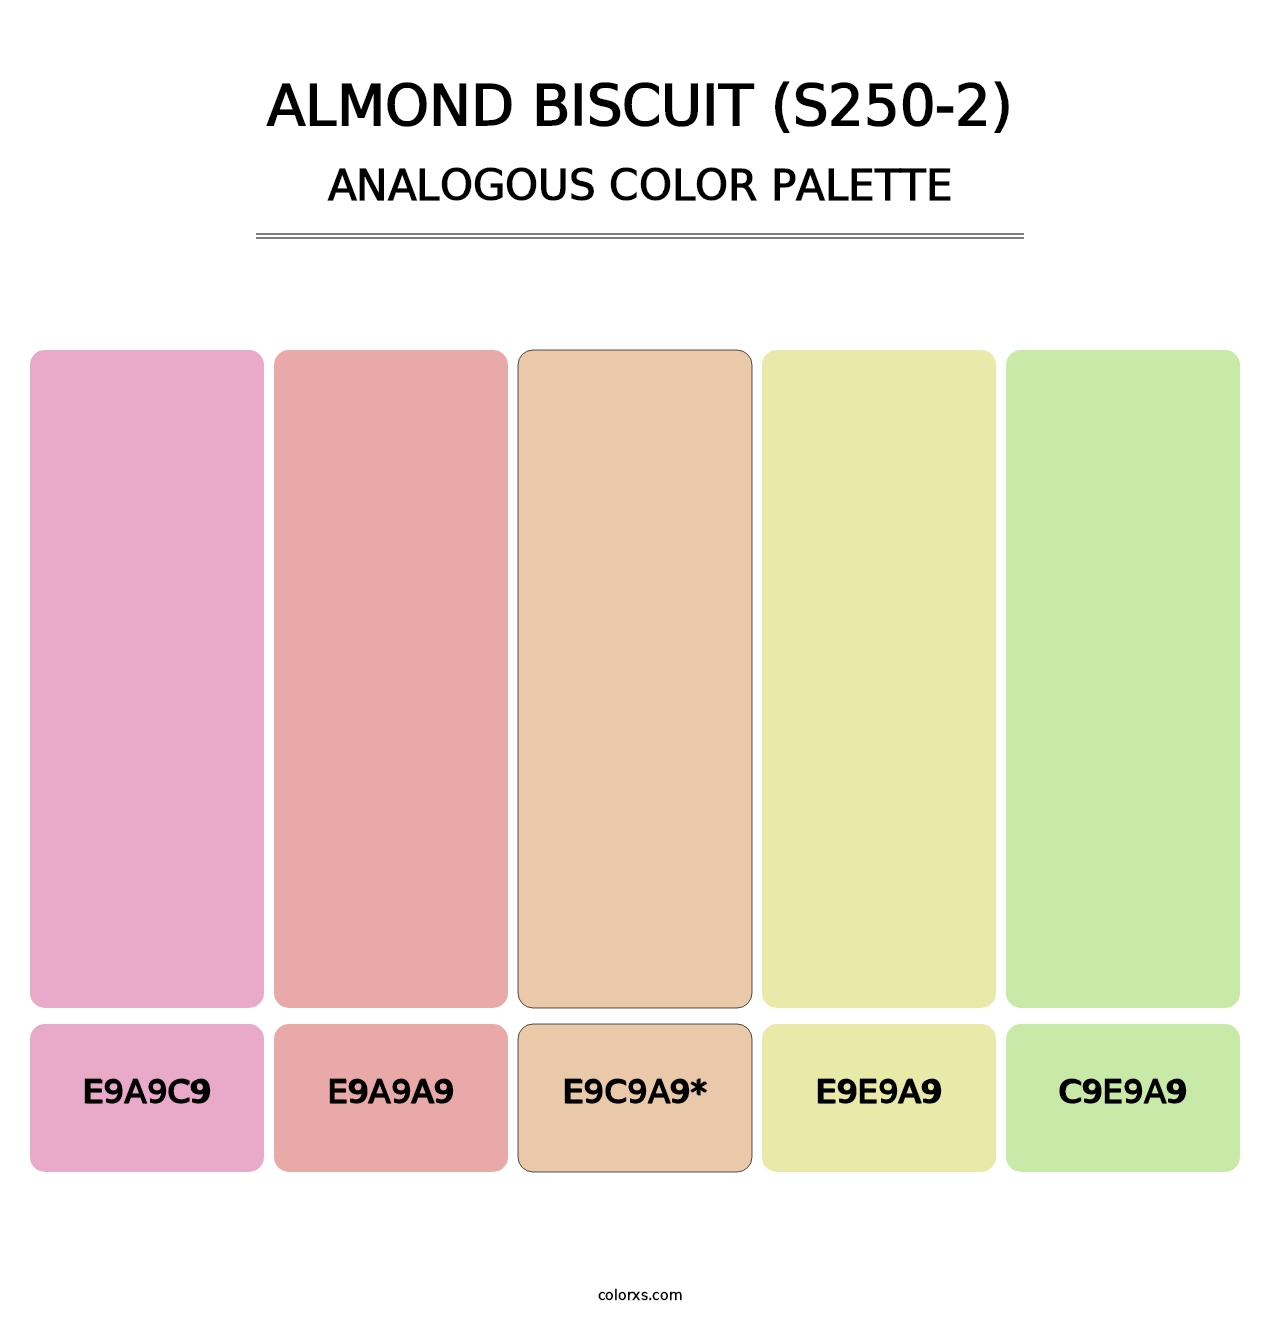 Almond Biscuit (S250-2) - Analogous Color Palette